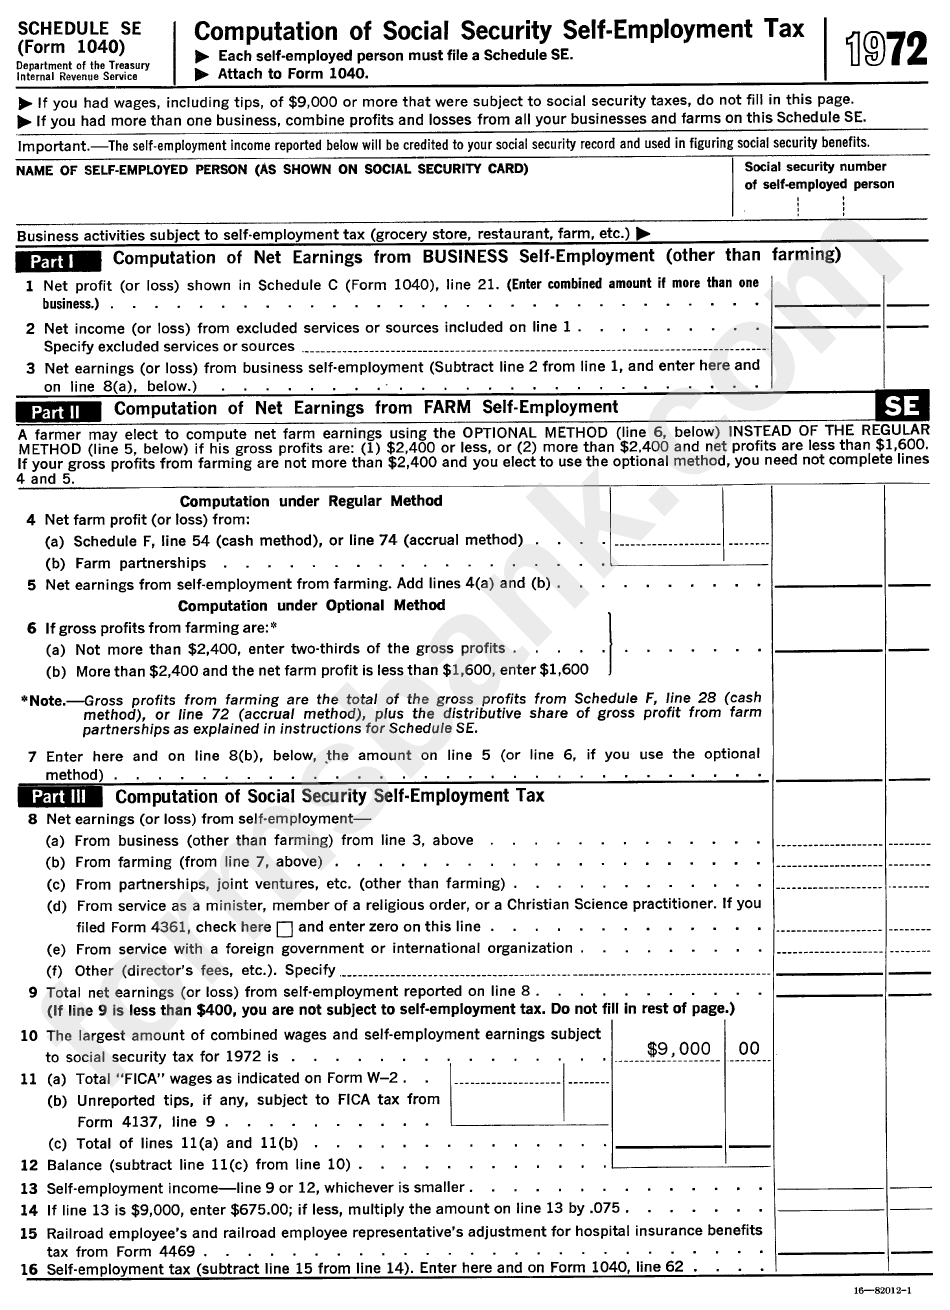 Schedule Se (Form 1040) - Computation Of Social Security Self